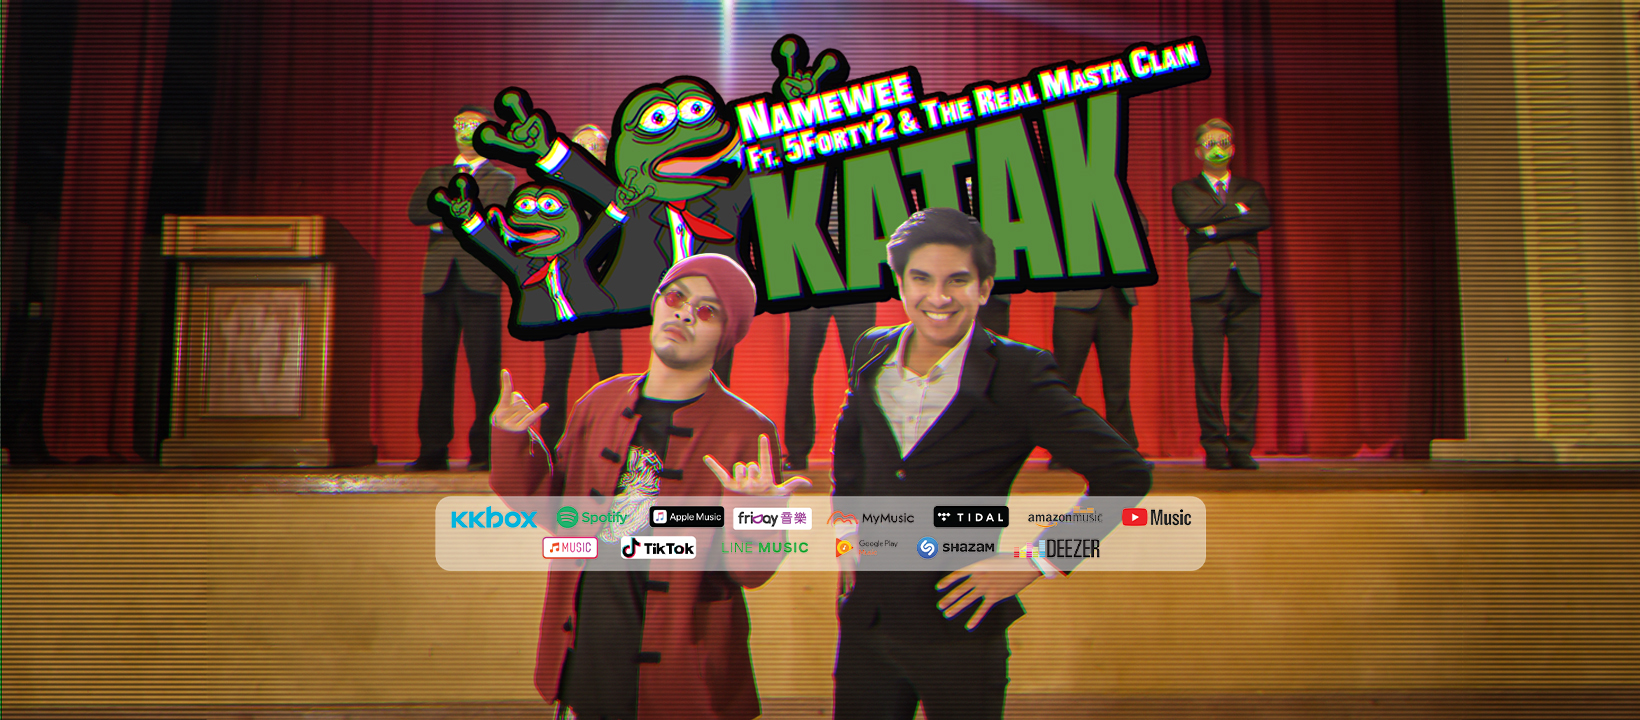 Syed saddiq cameo in namewee latest music video, katak